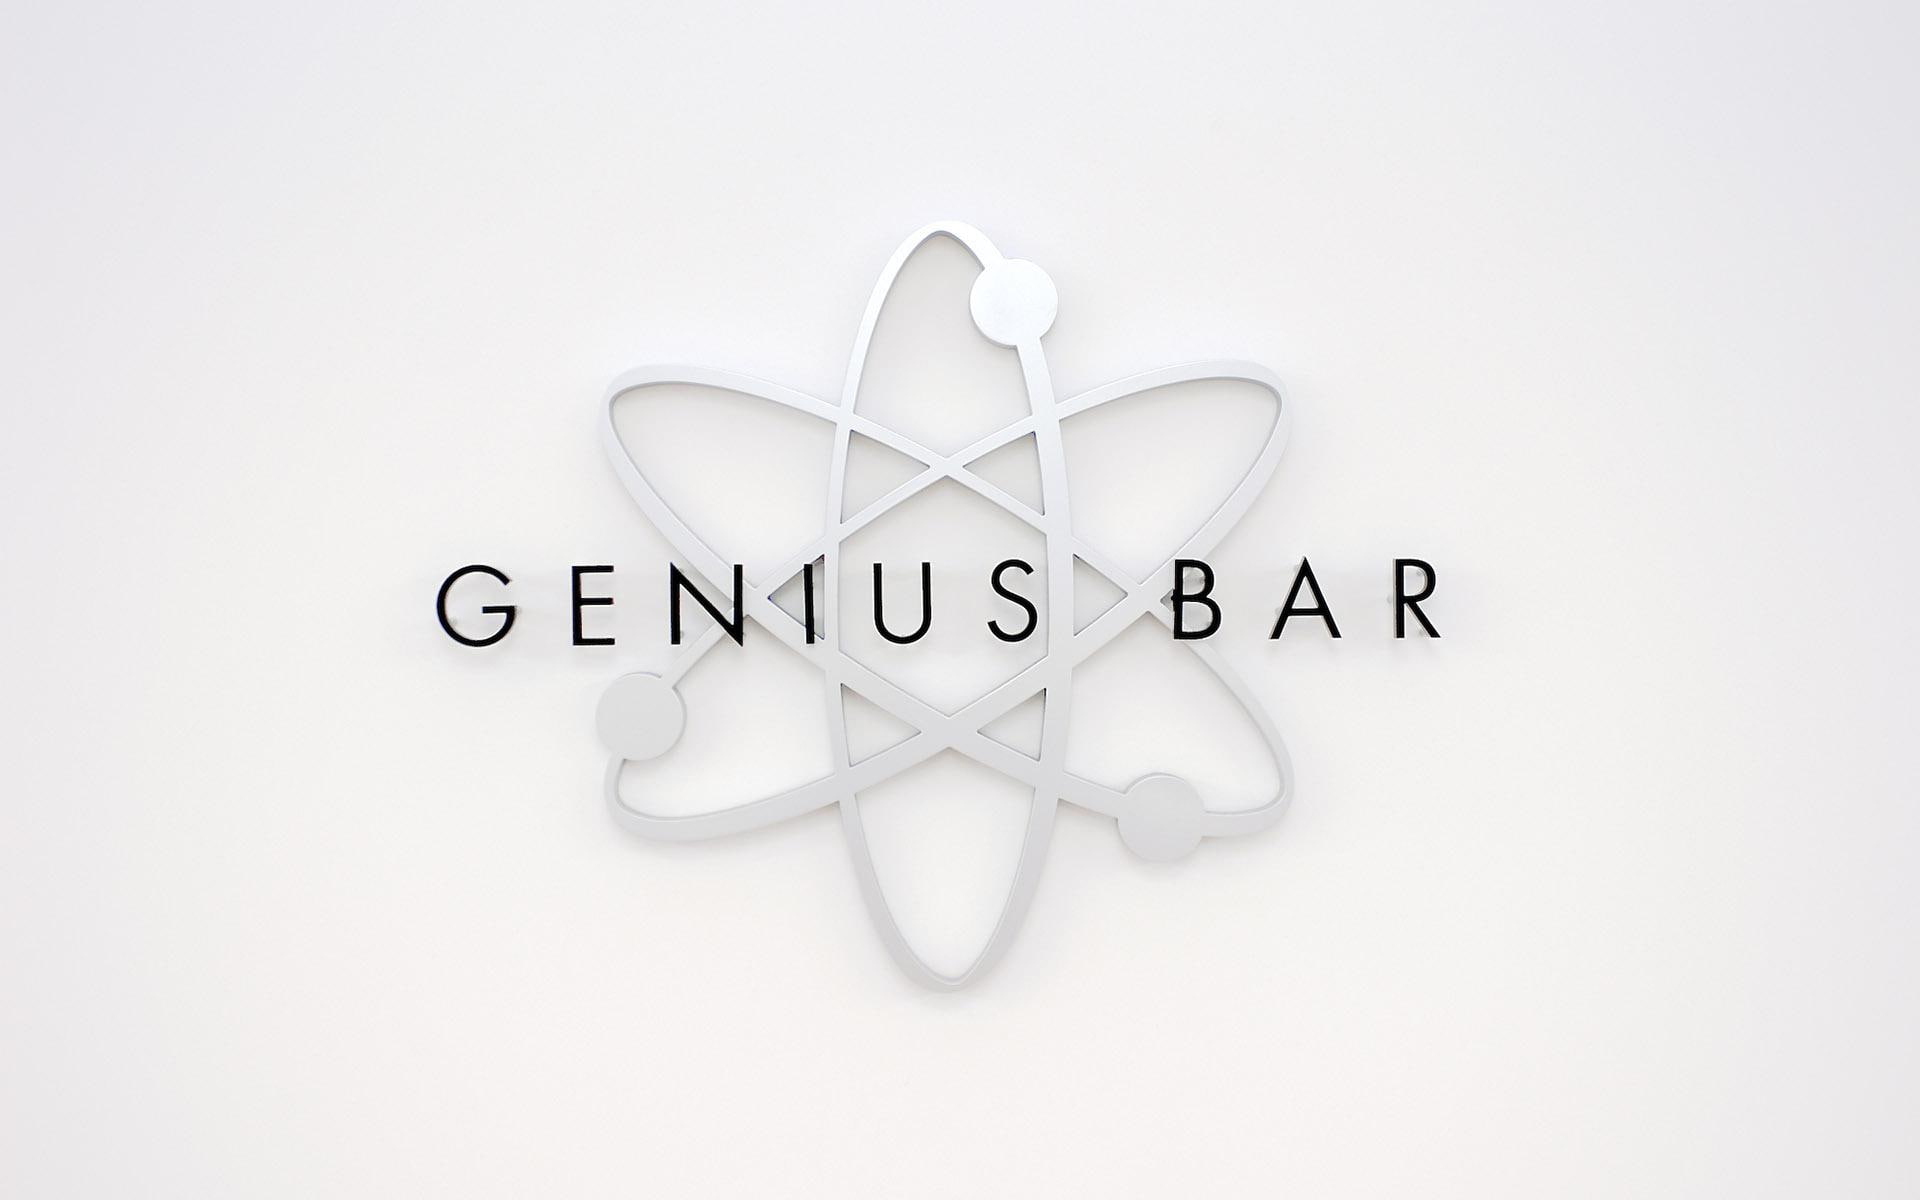 Genius Bar, genius bar logo, computers, 1920x1200, apple, macintosh